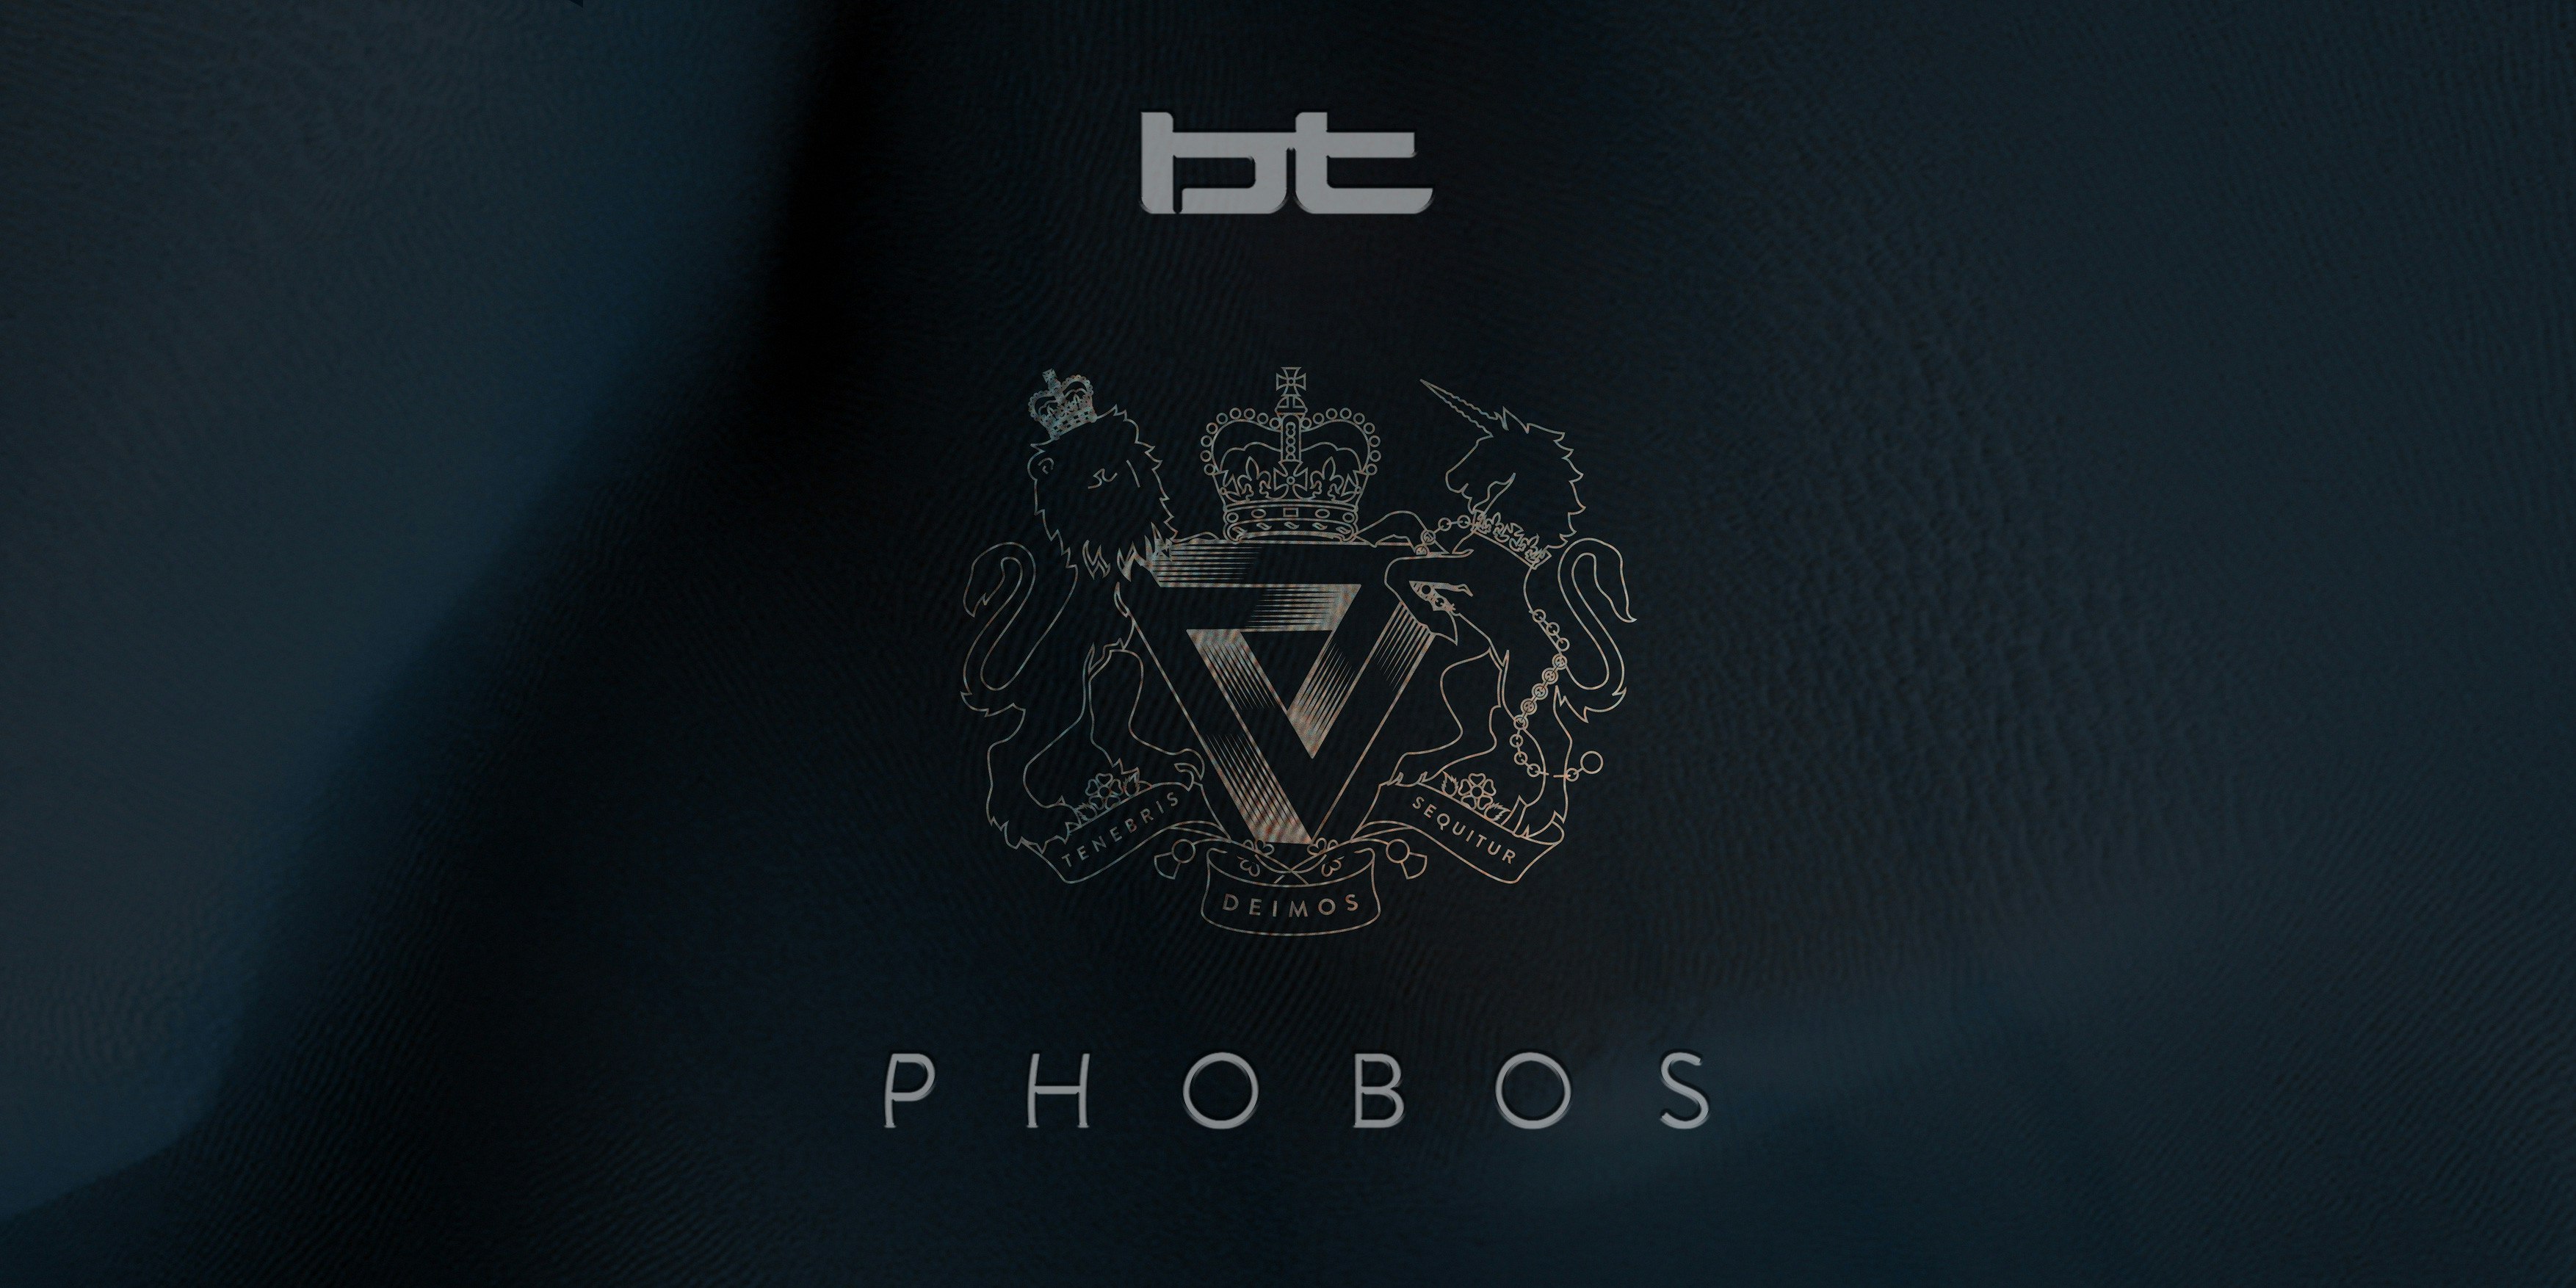 BT Phobos — Spitfire Audio pic